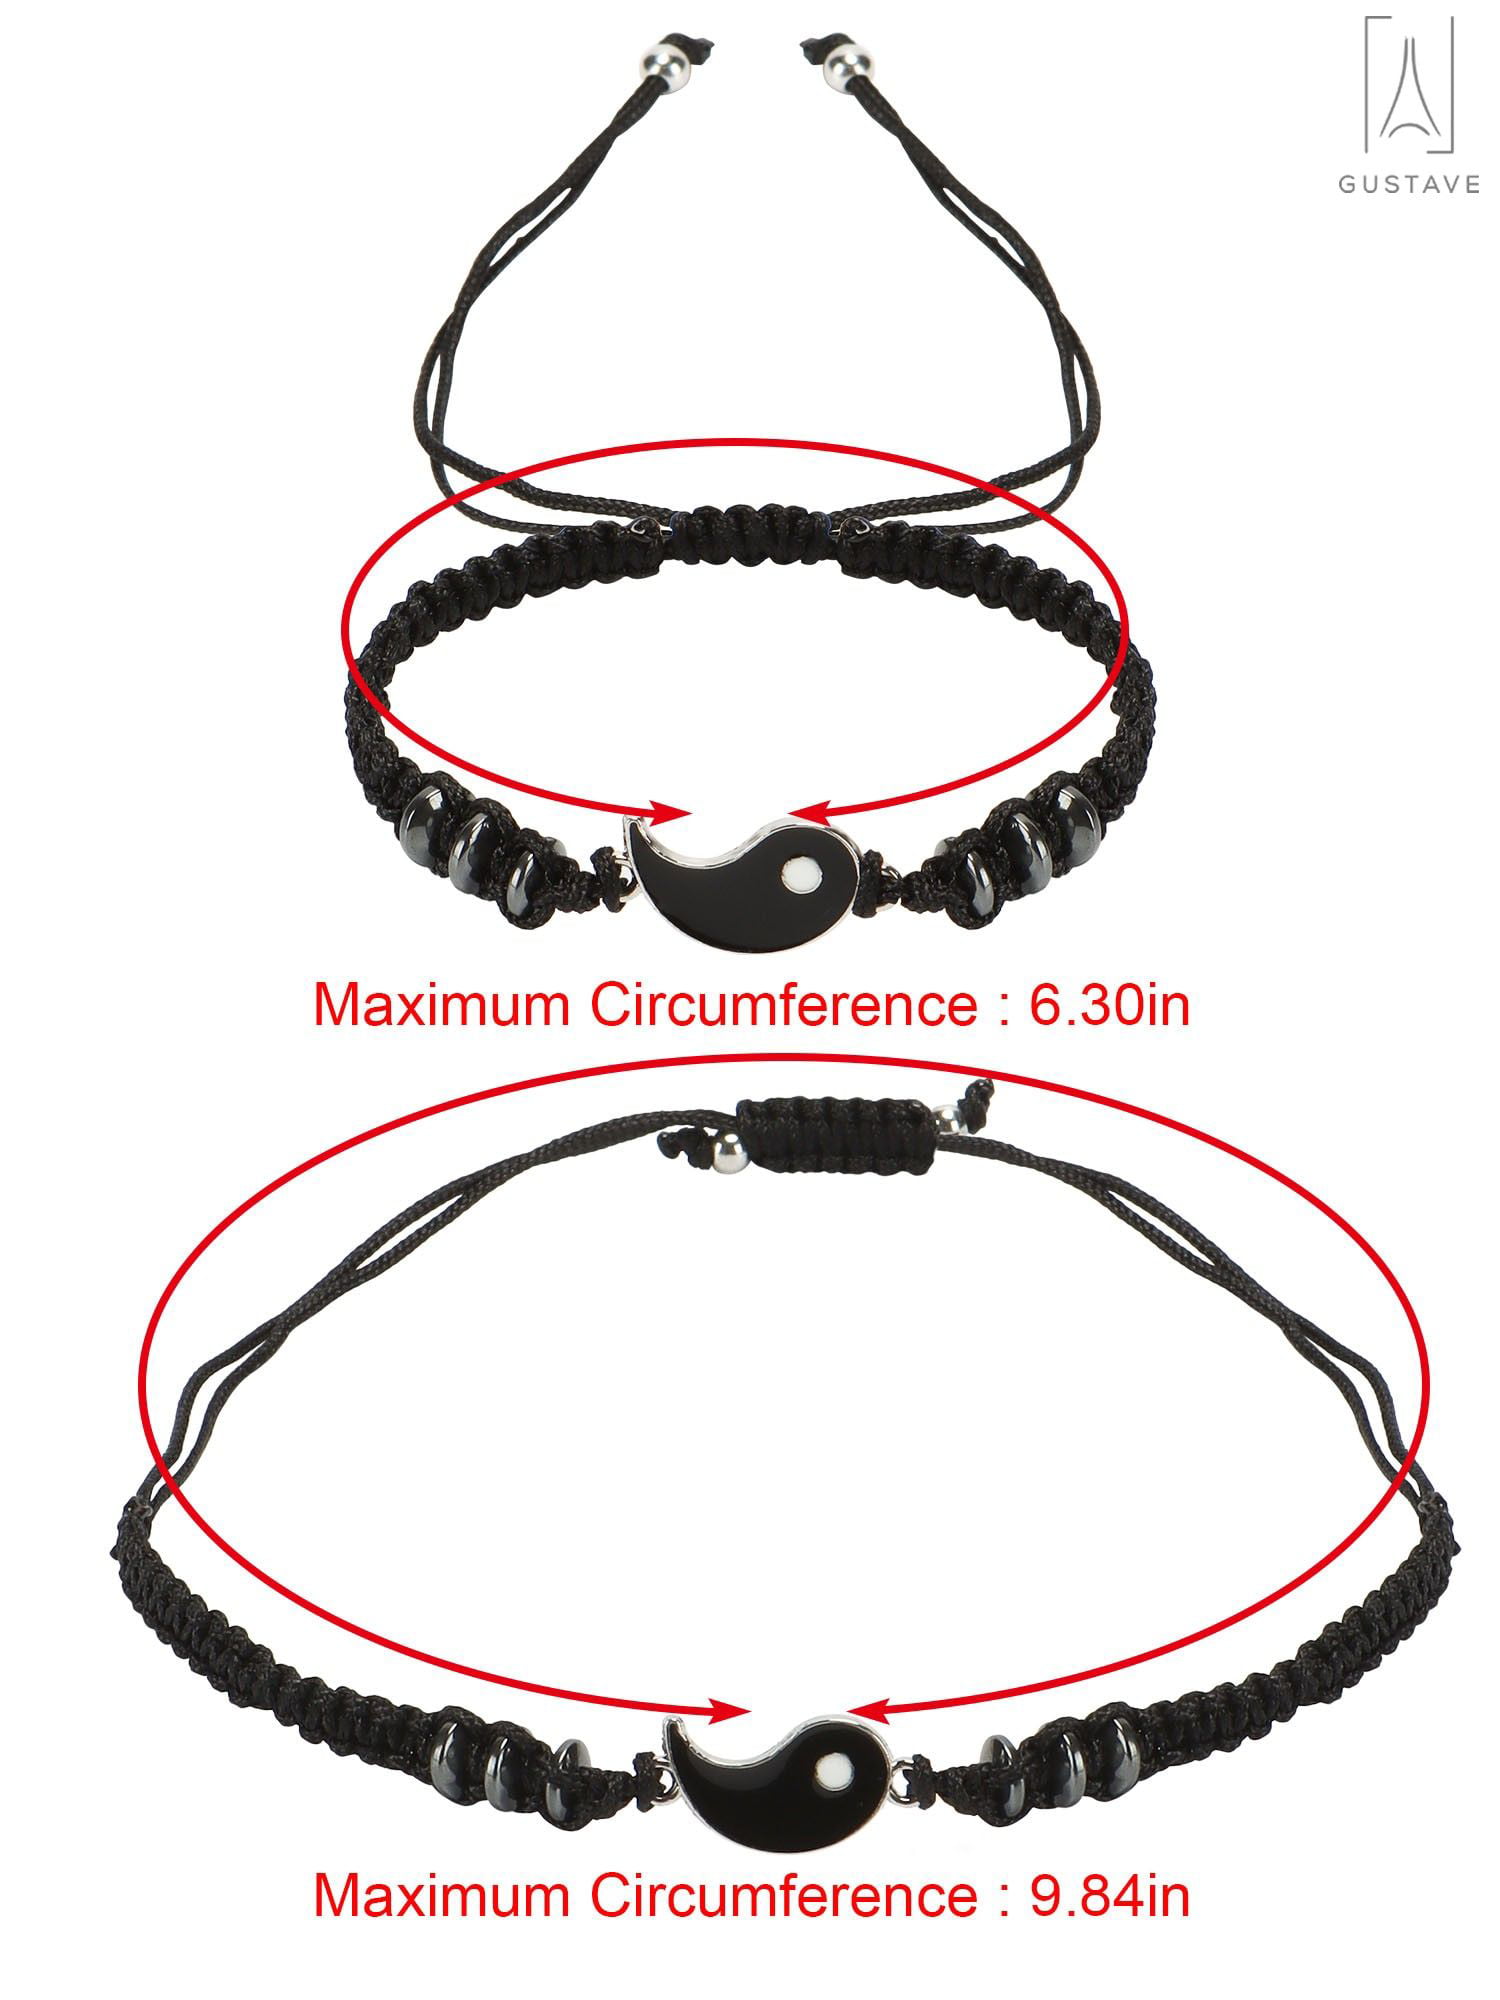 Black & White Yin/Yang Symbol Bracelet – Handcrafted Jewelry By Teri C